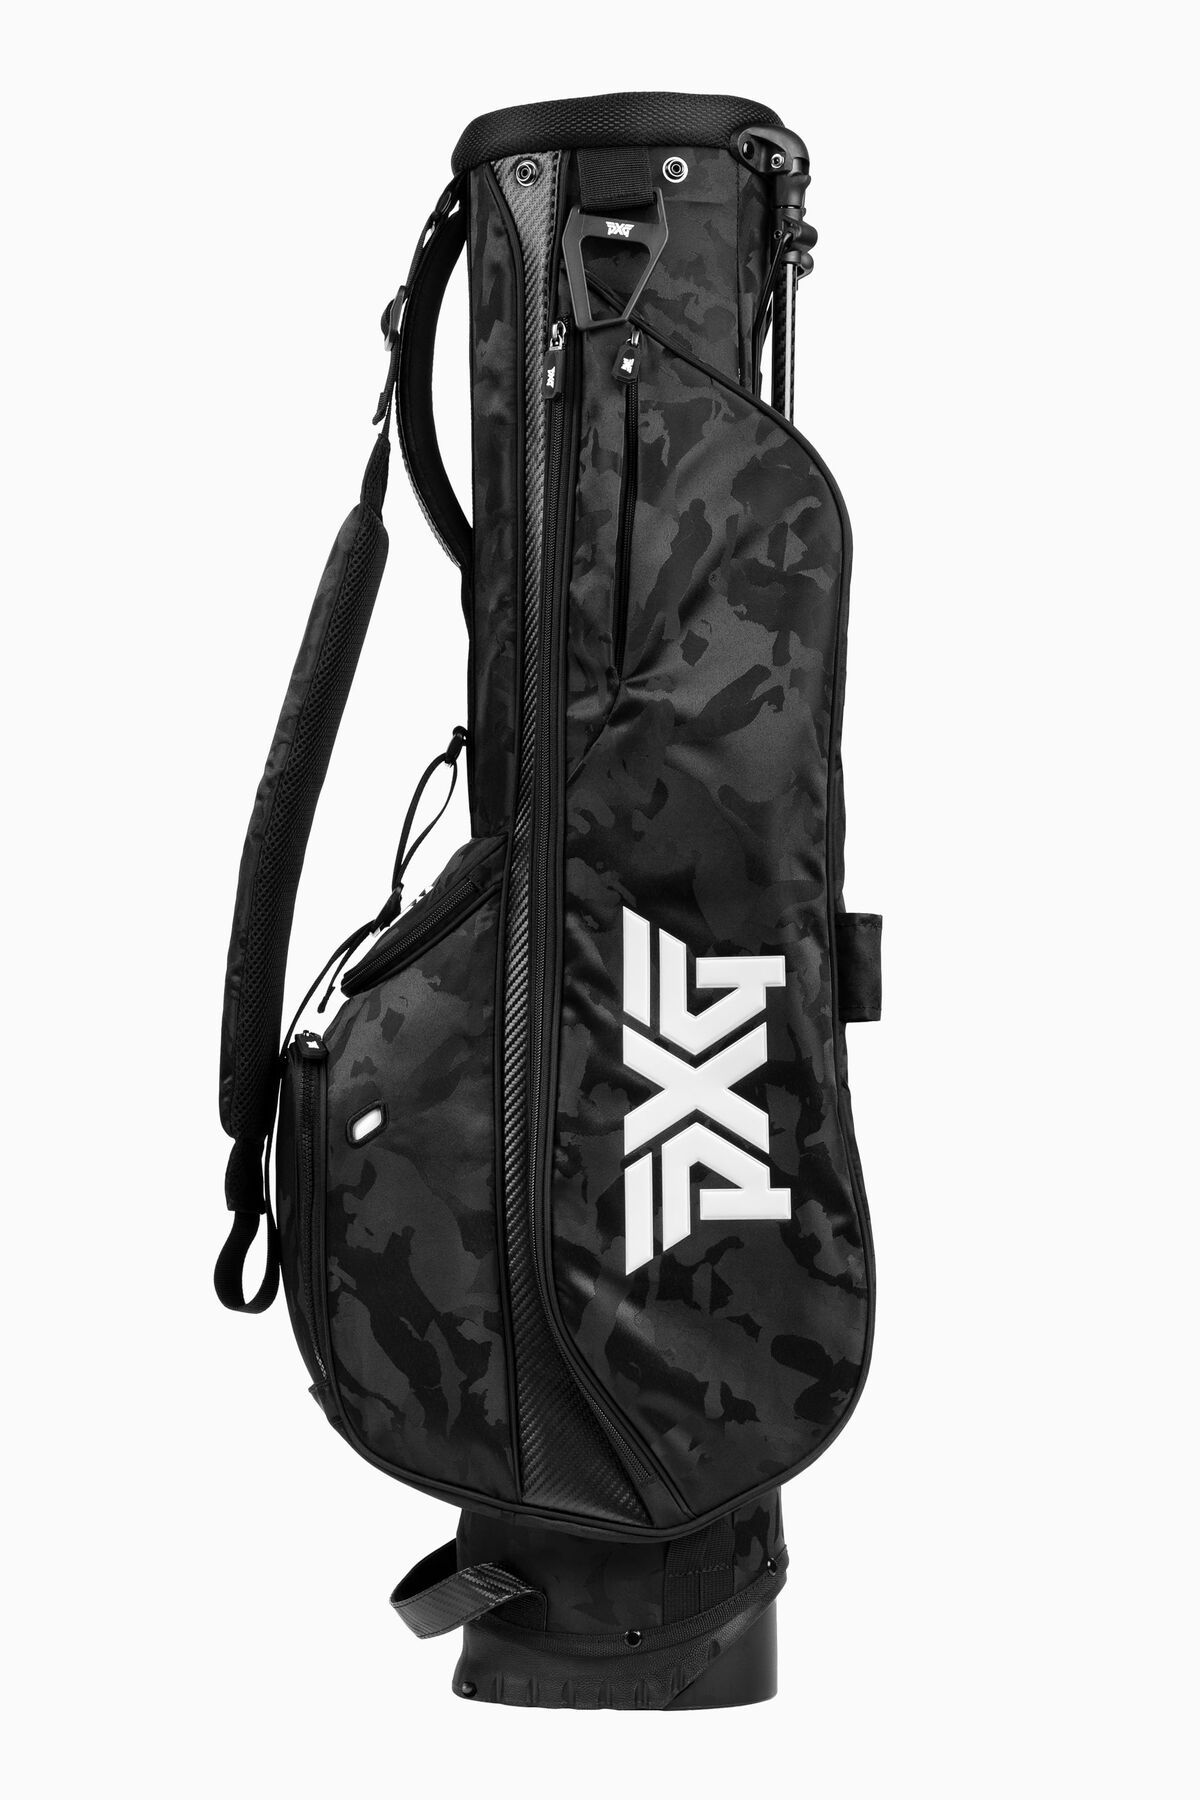 PXG Hybrid Stand Bag in Black/White